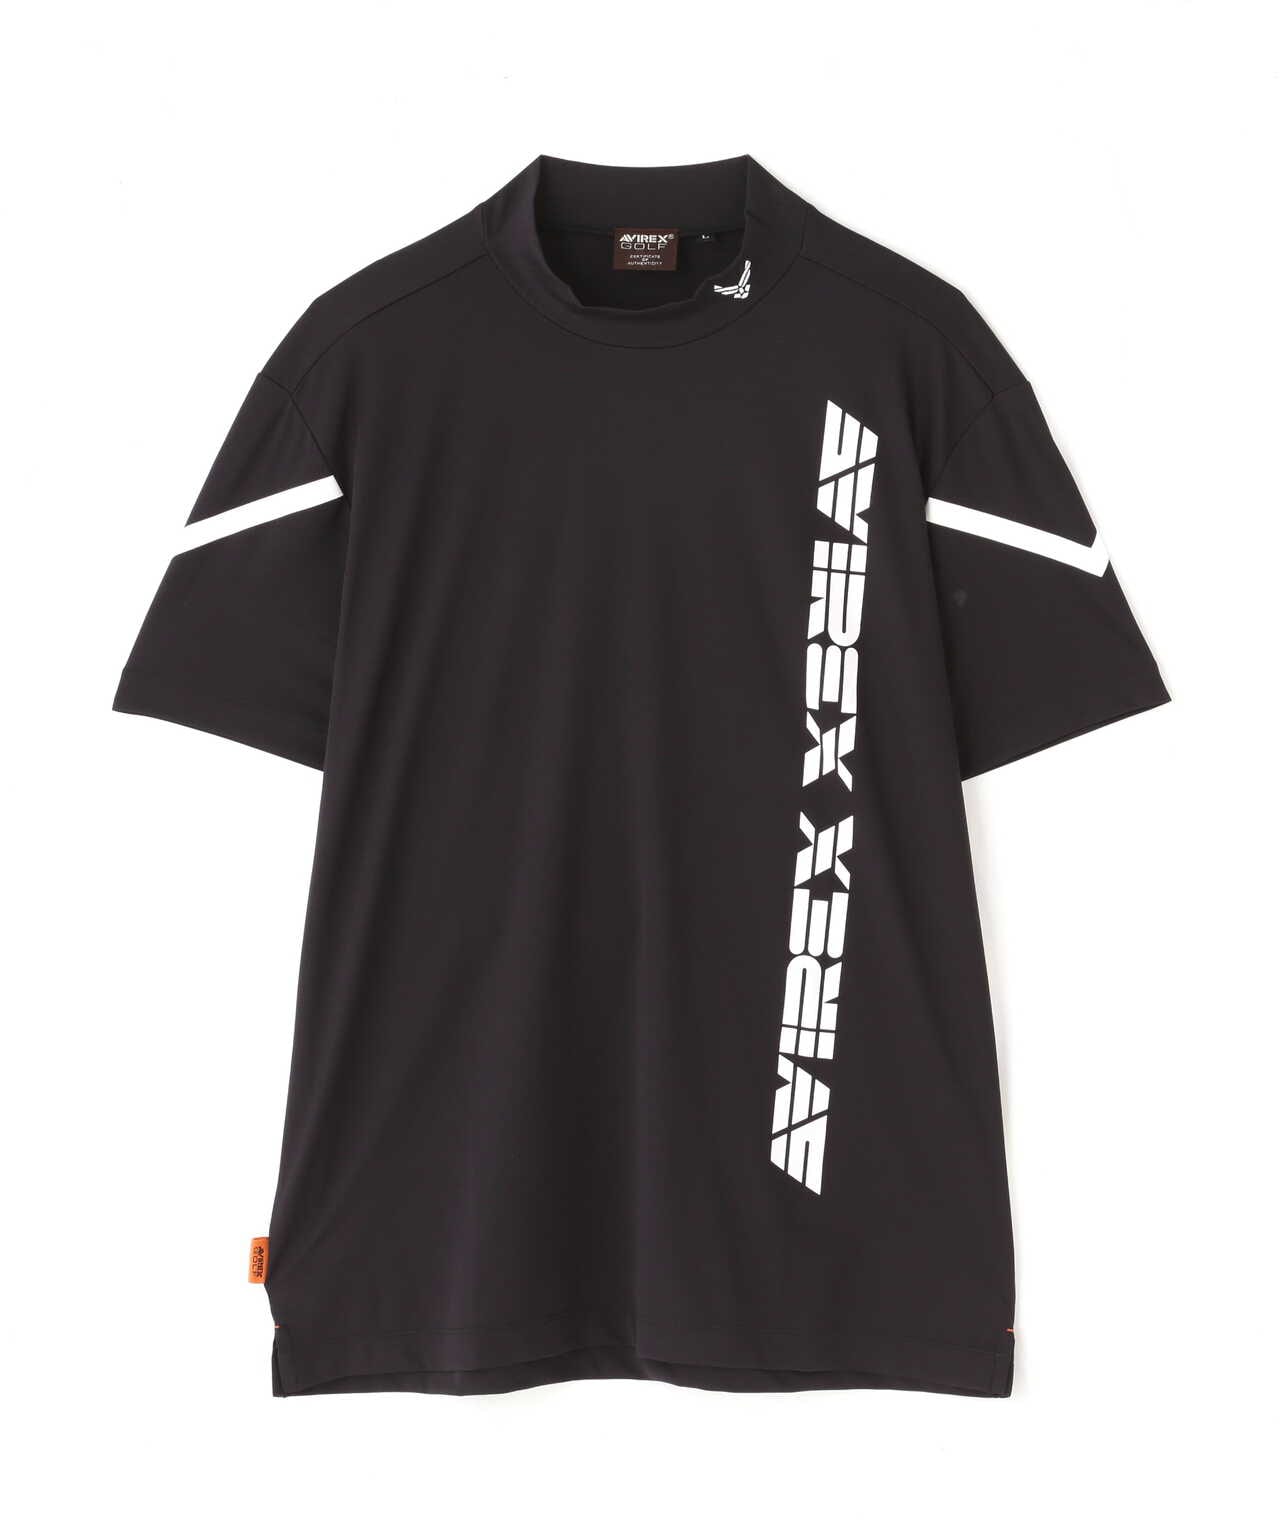 GOLF WEAR》PTU ロゴ モックネック Tシャツ / アヴィレックス /AVIREX